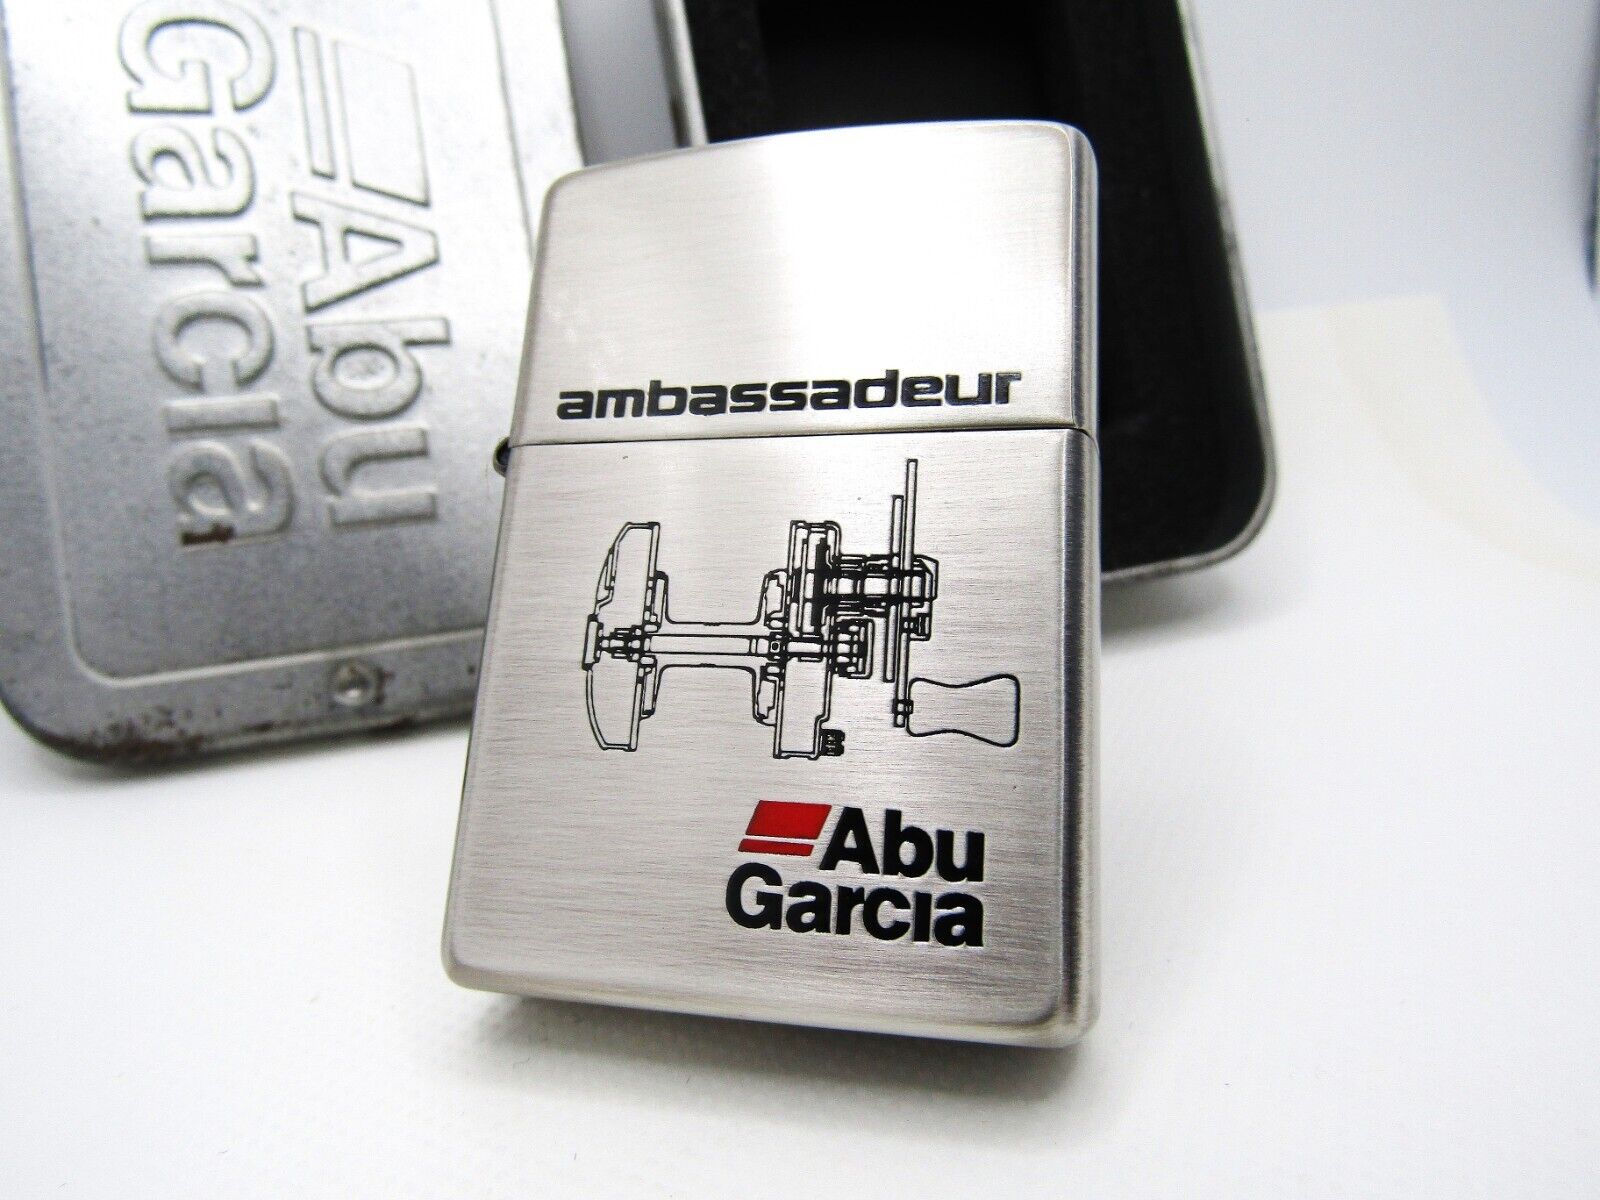 Abu Garcia Ambassader Engraved Zippo 1997 MIB Rare